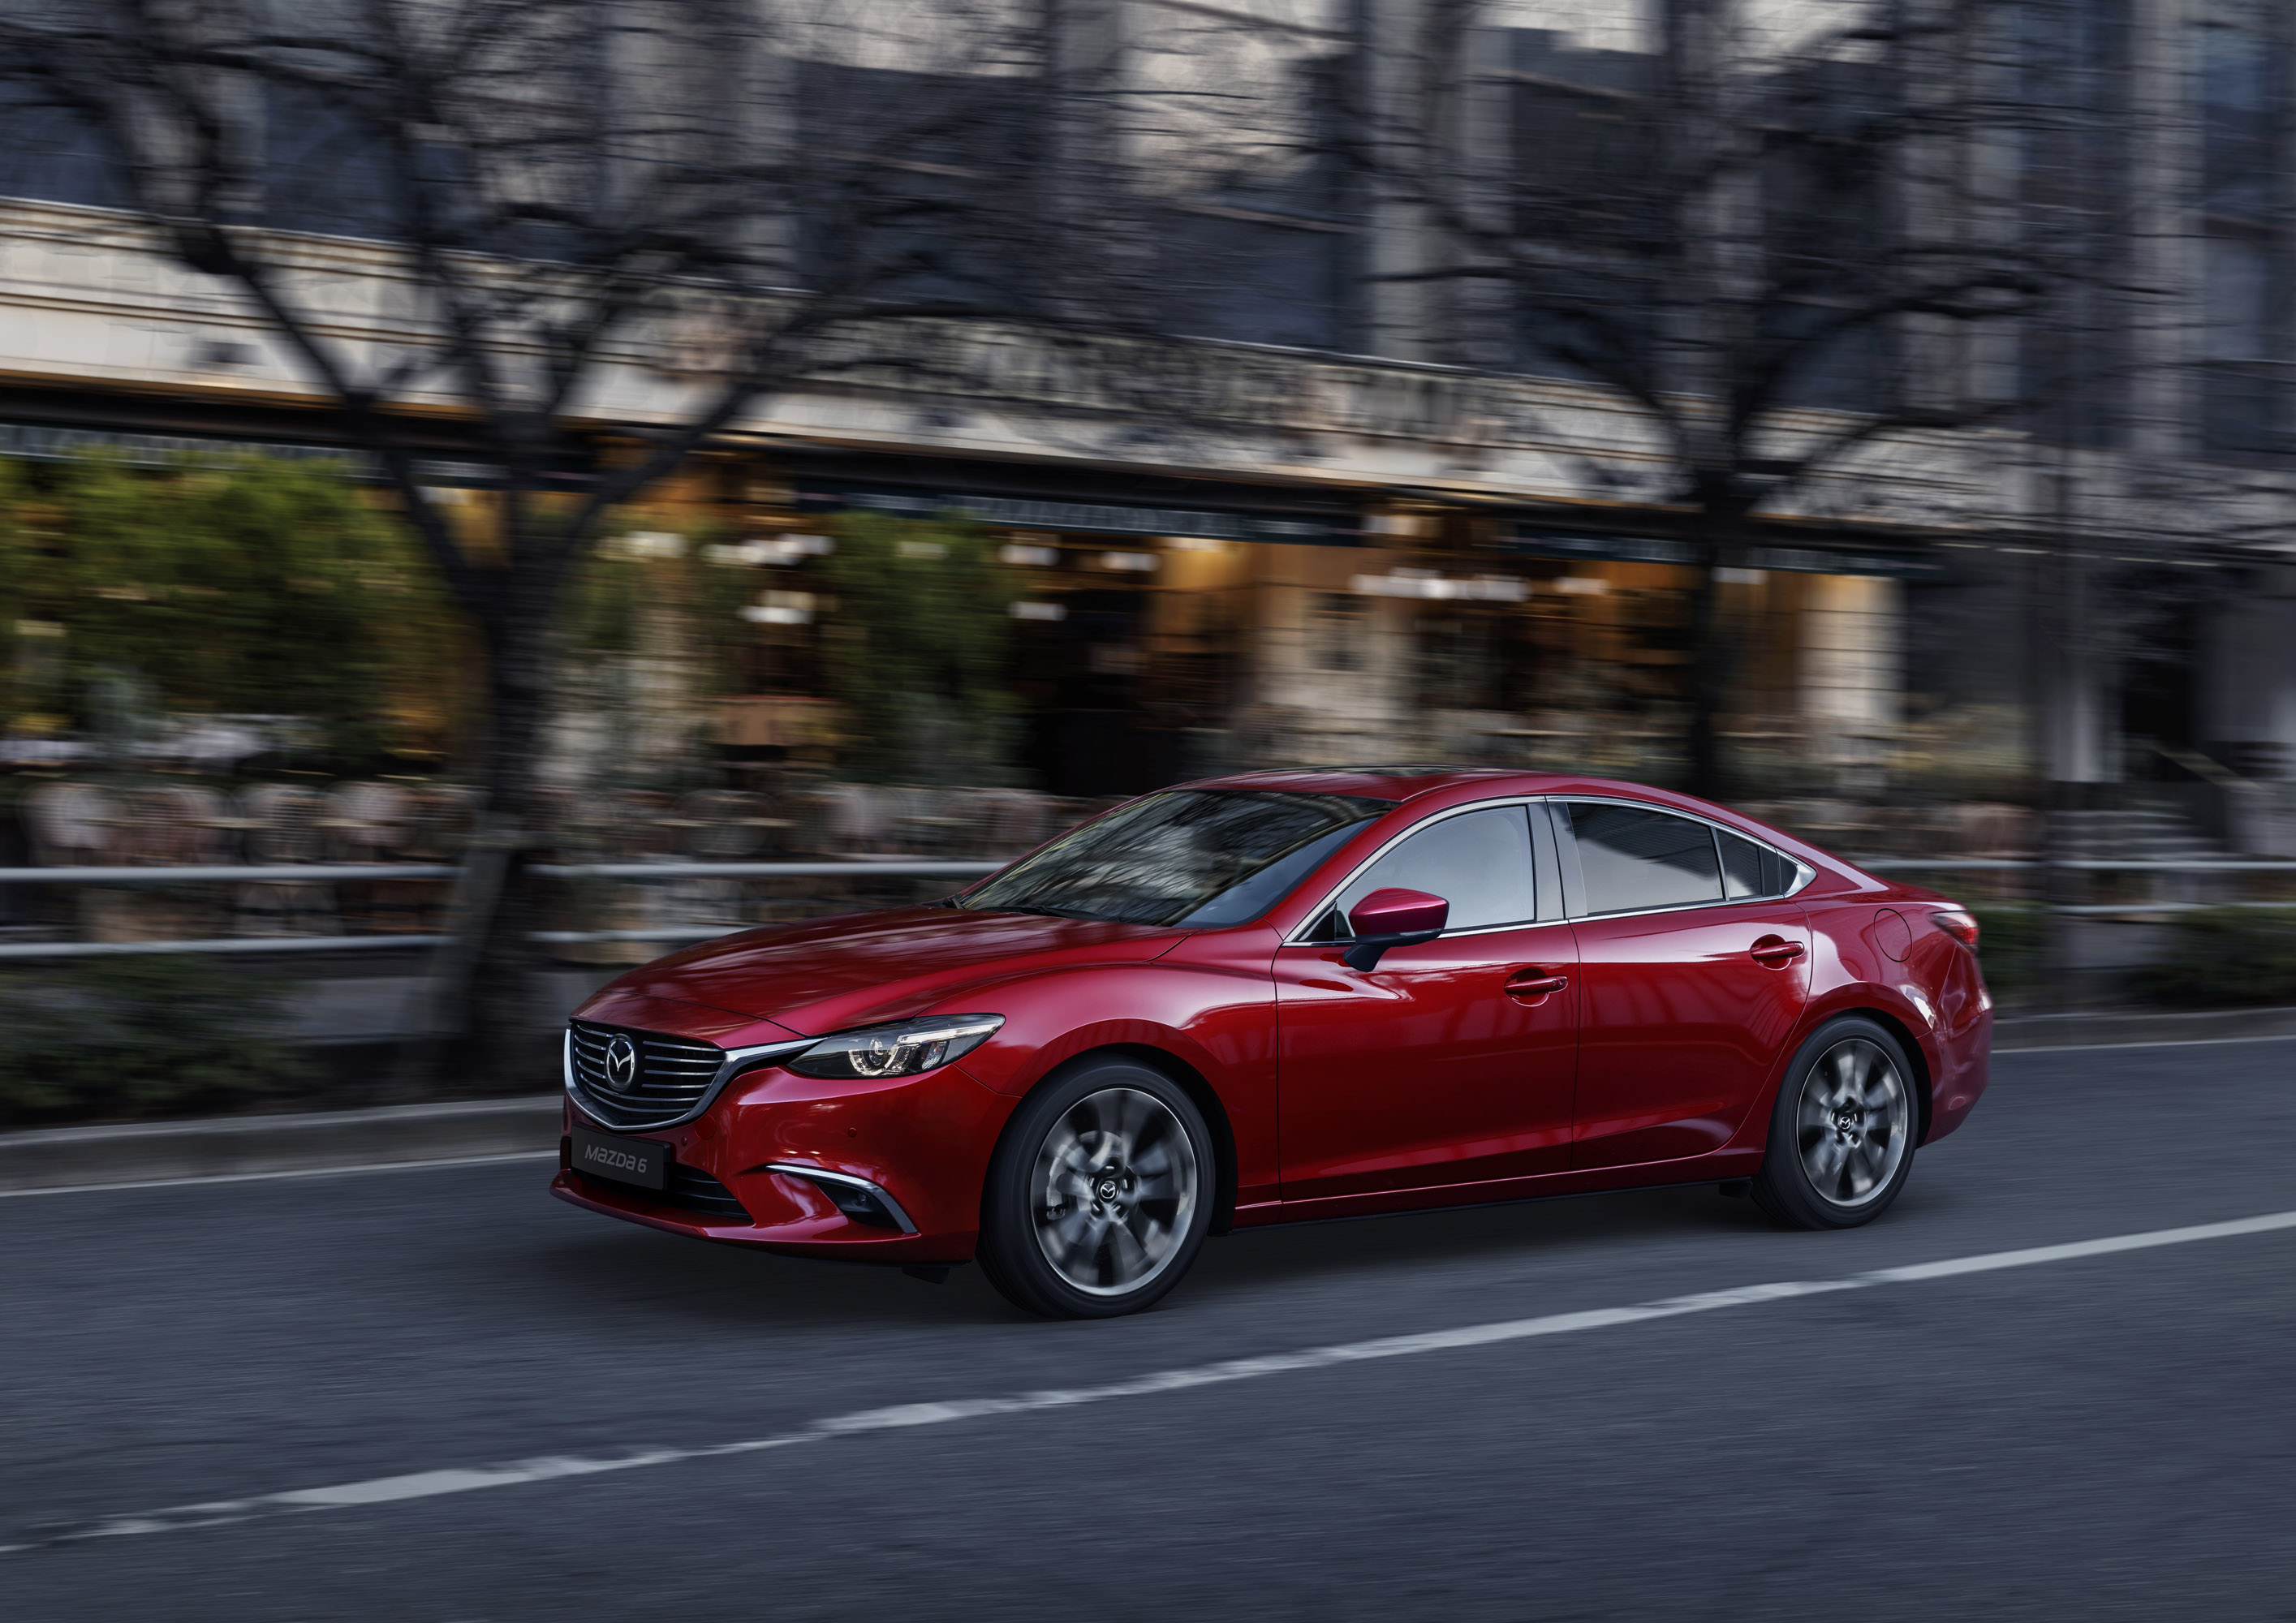 Mazda reveals details for the 2017 Mazda6 model